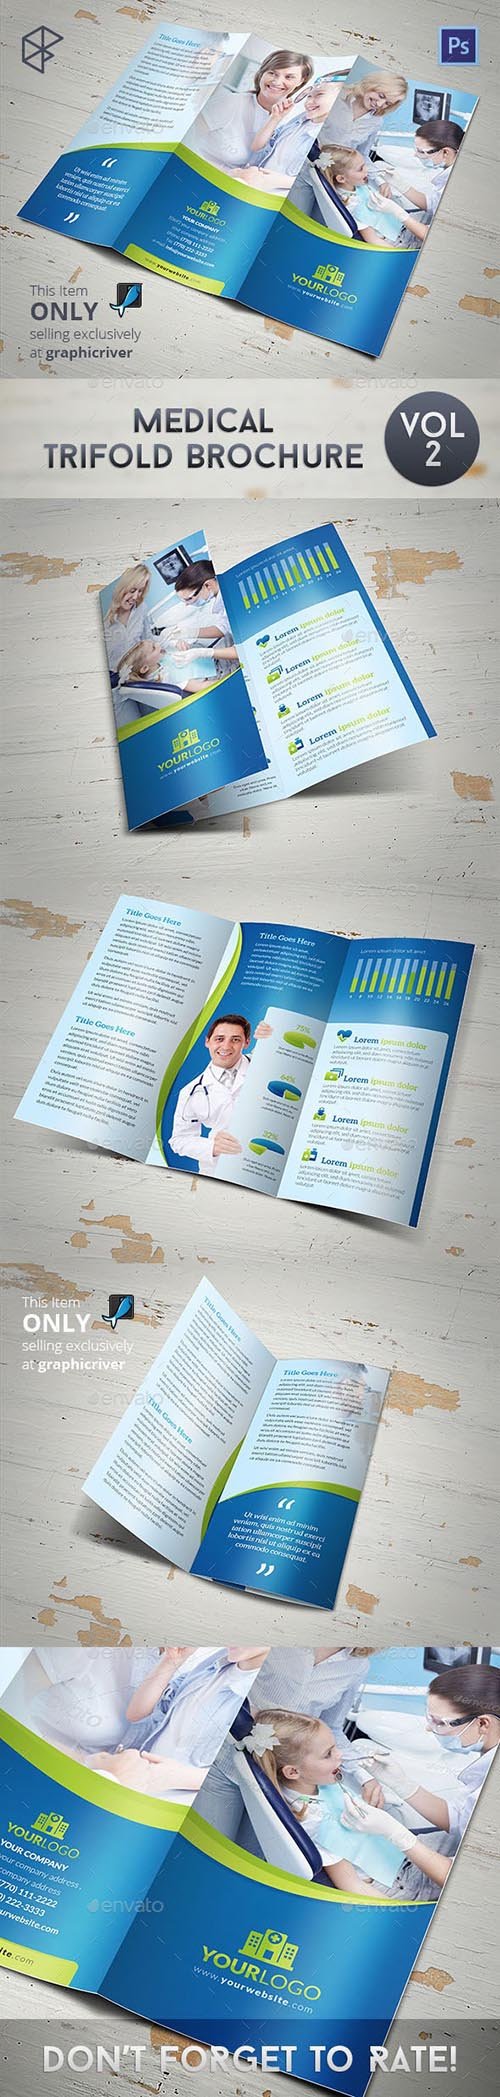 Medical Trifold Brochure Vol2 8005155